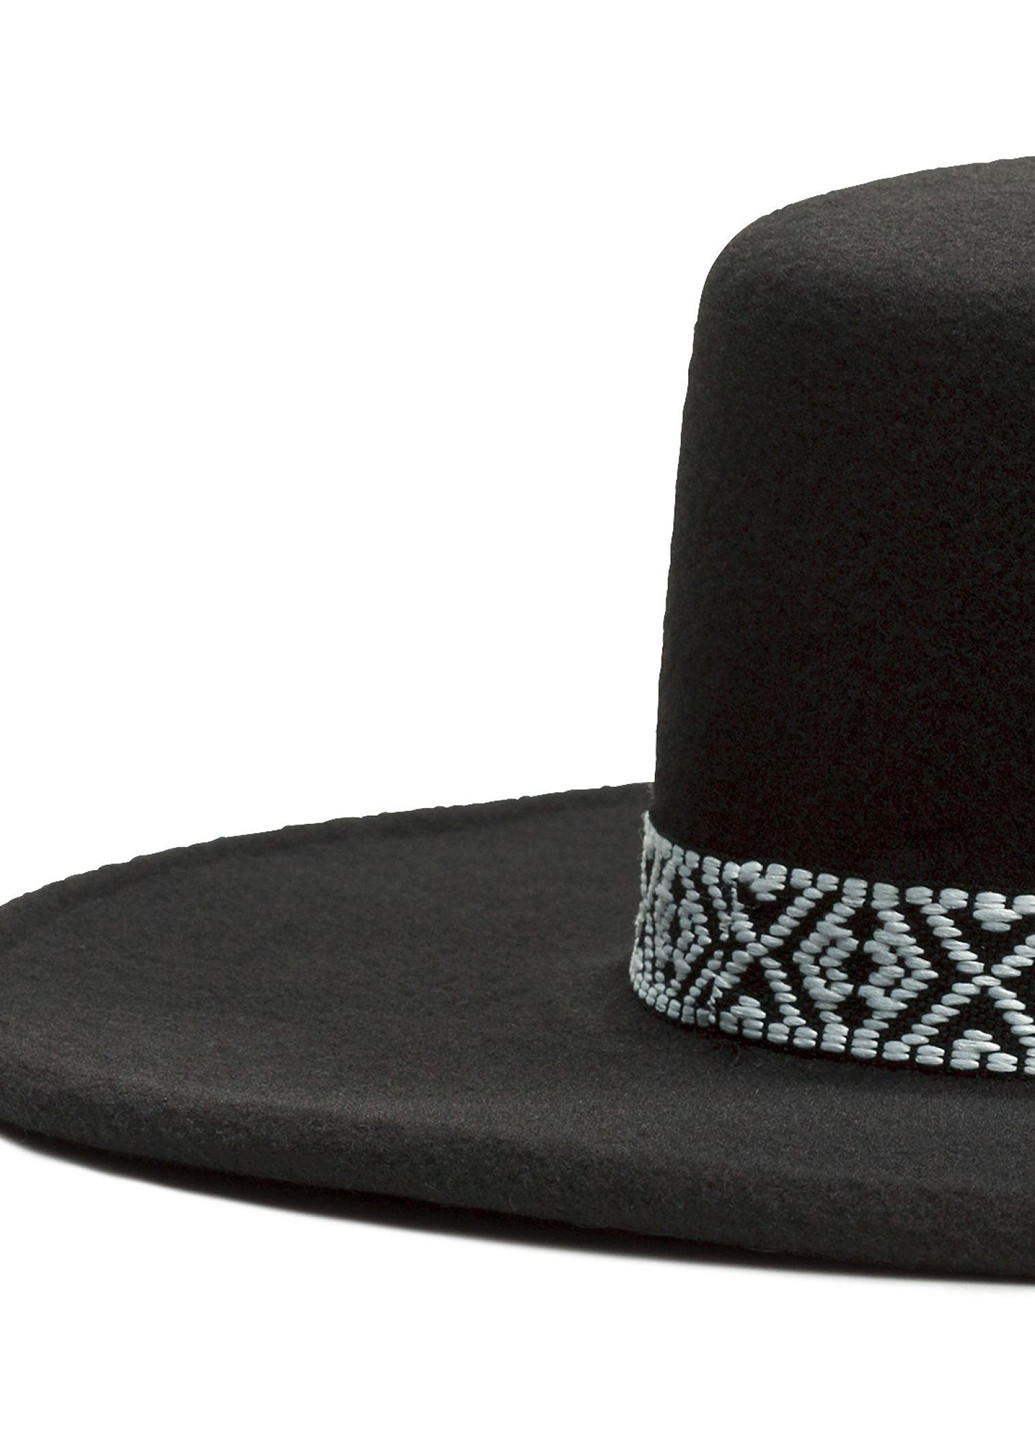 Шляпа H&M канотье однотонная чёрная кэжуал полиэстер